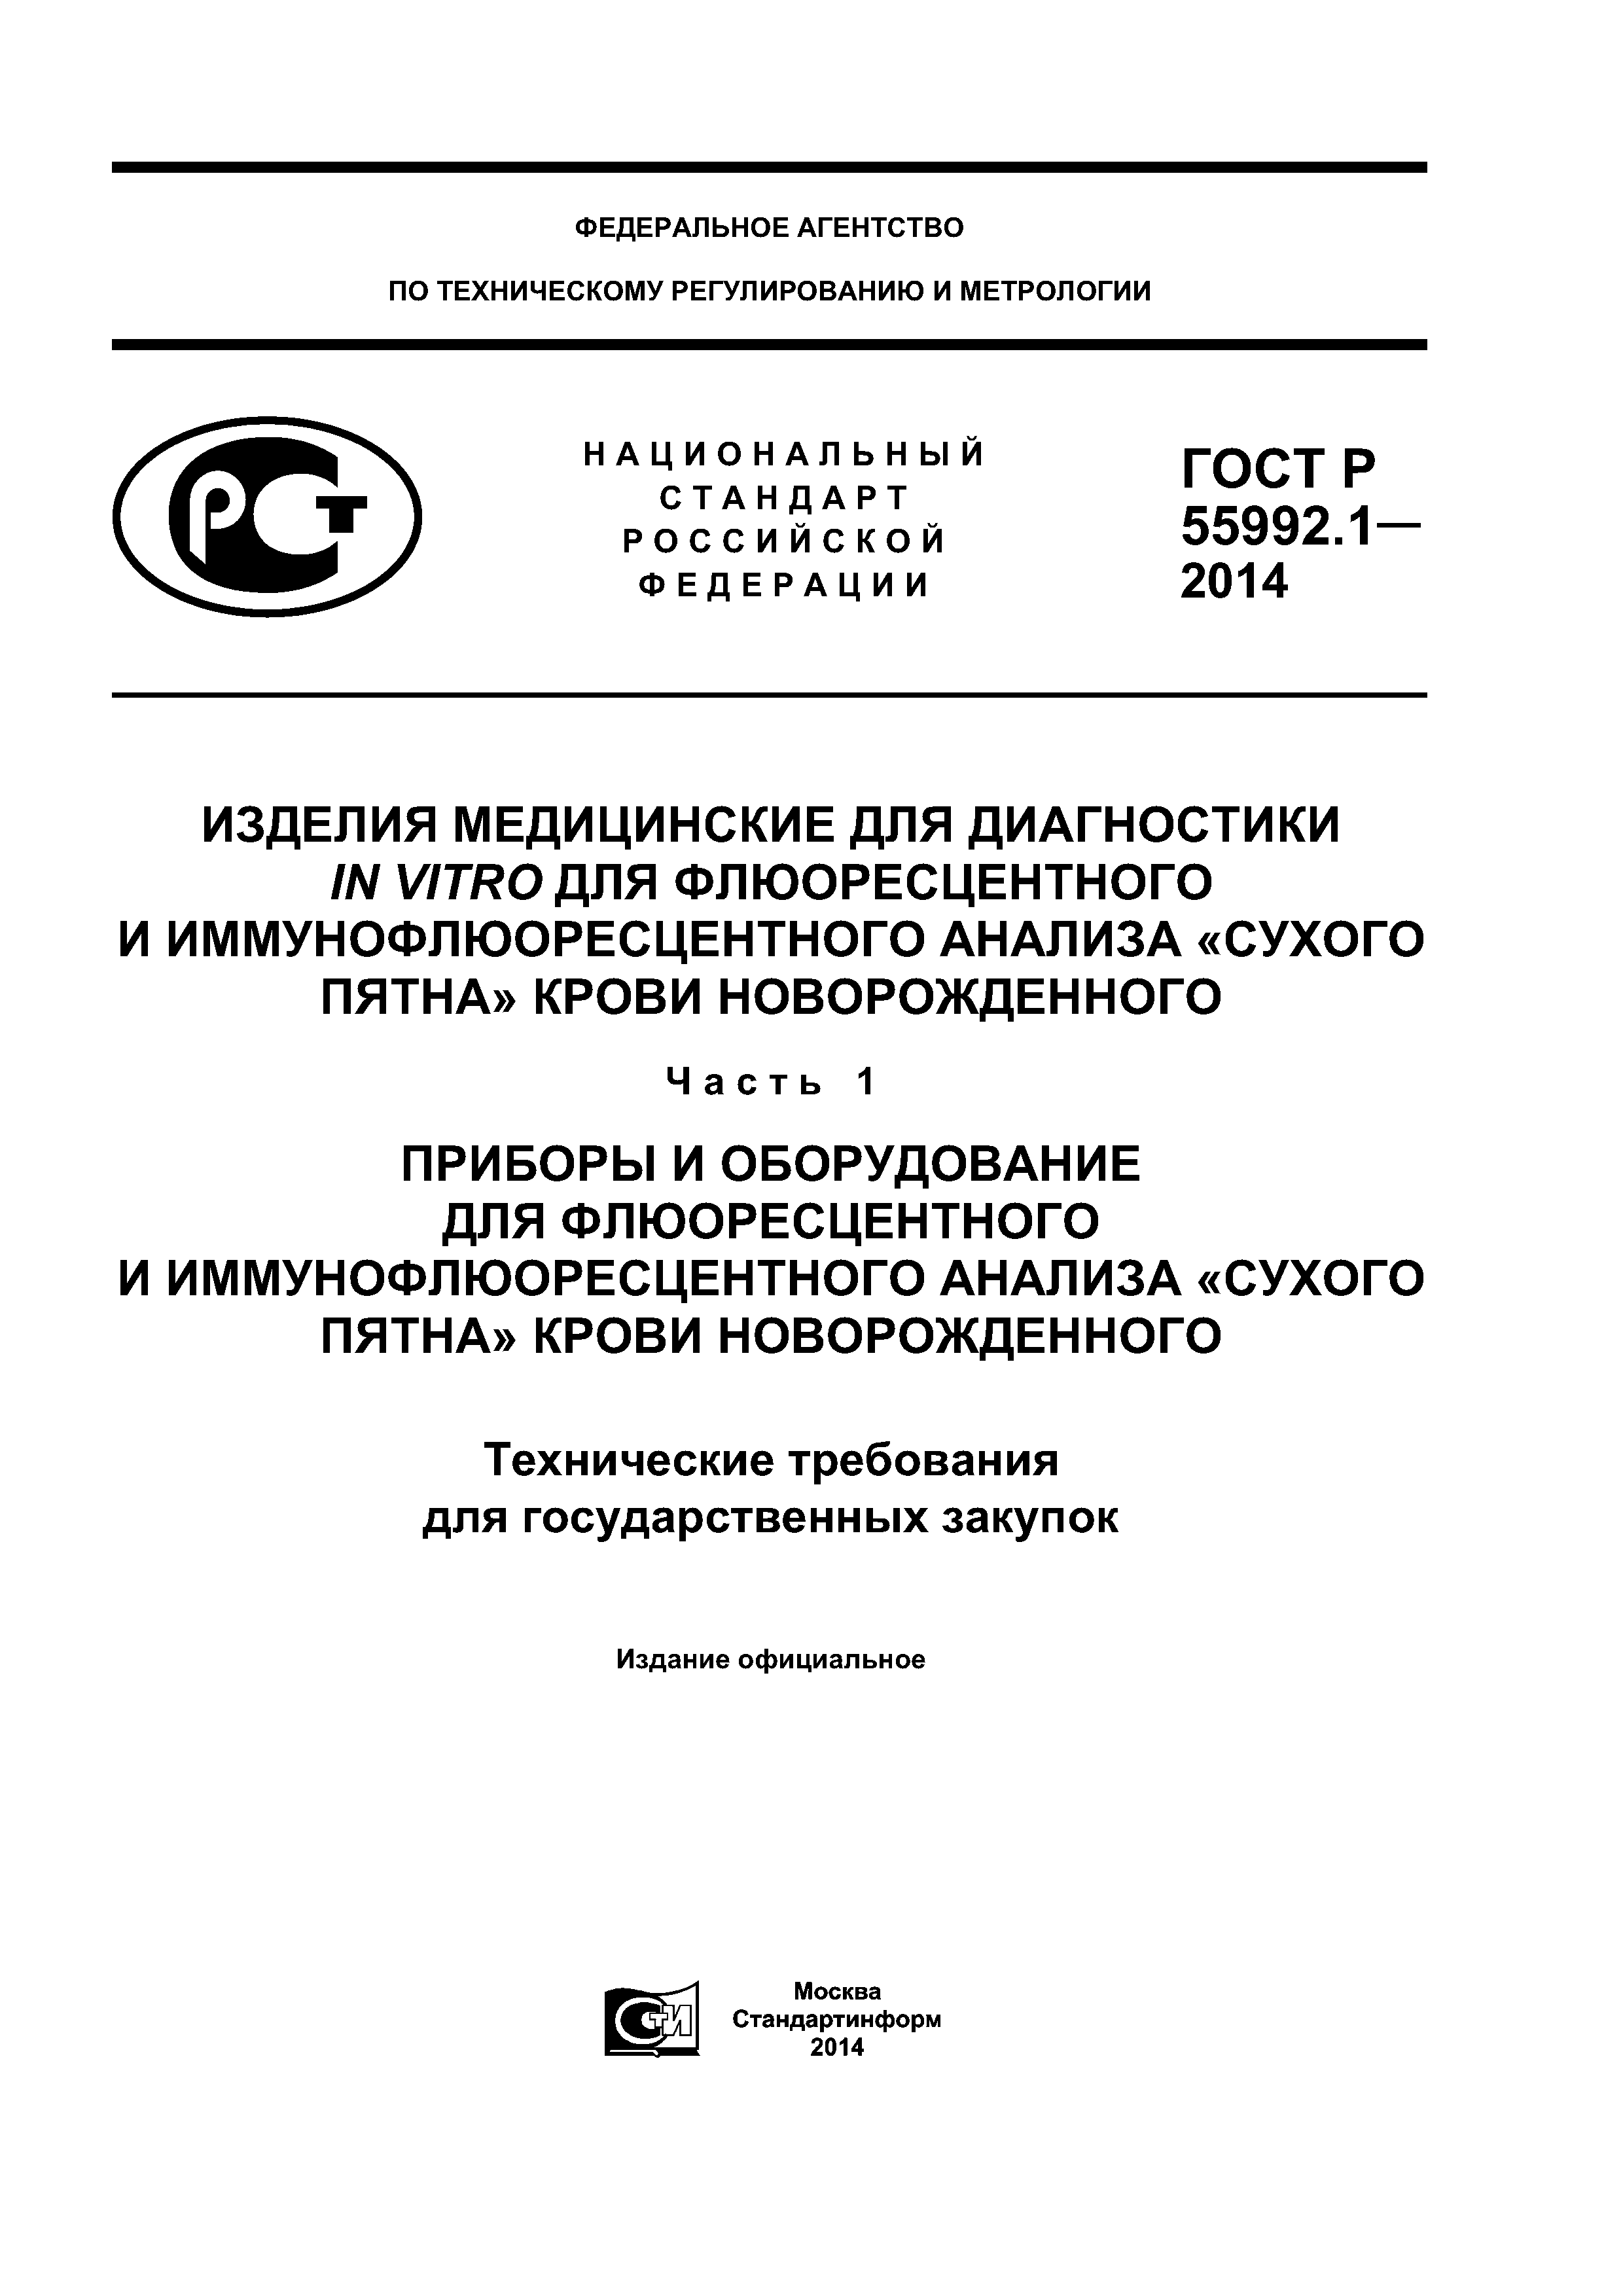 ГОСТ Р 55992.1-2014